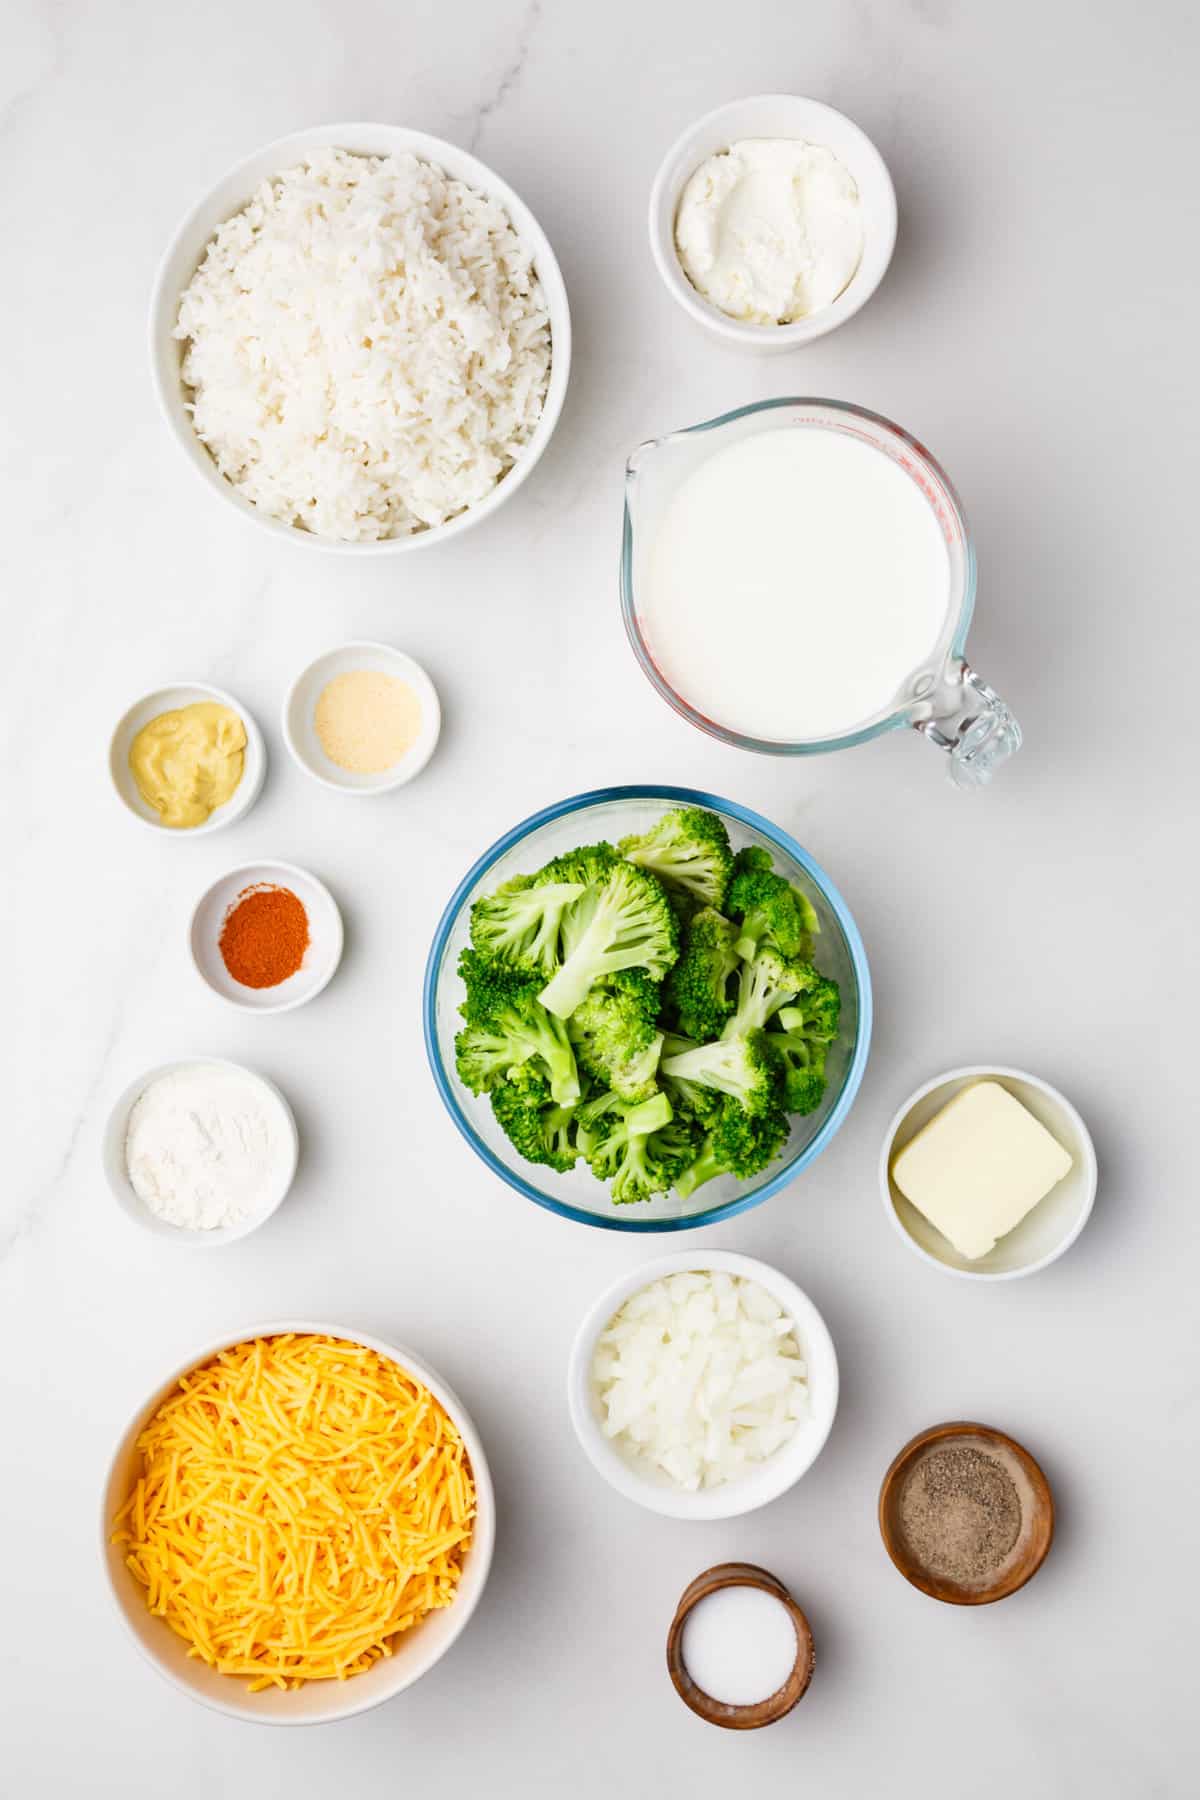 ingredients to make cheesy broccoli rice casserole.